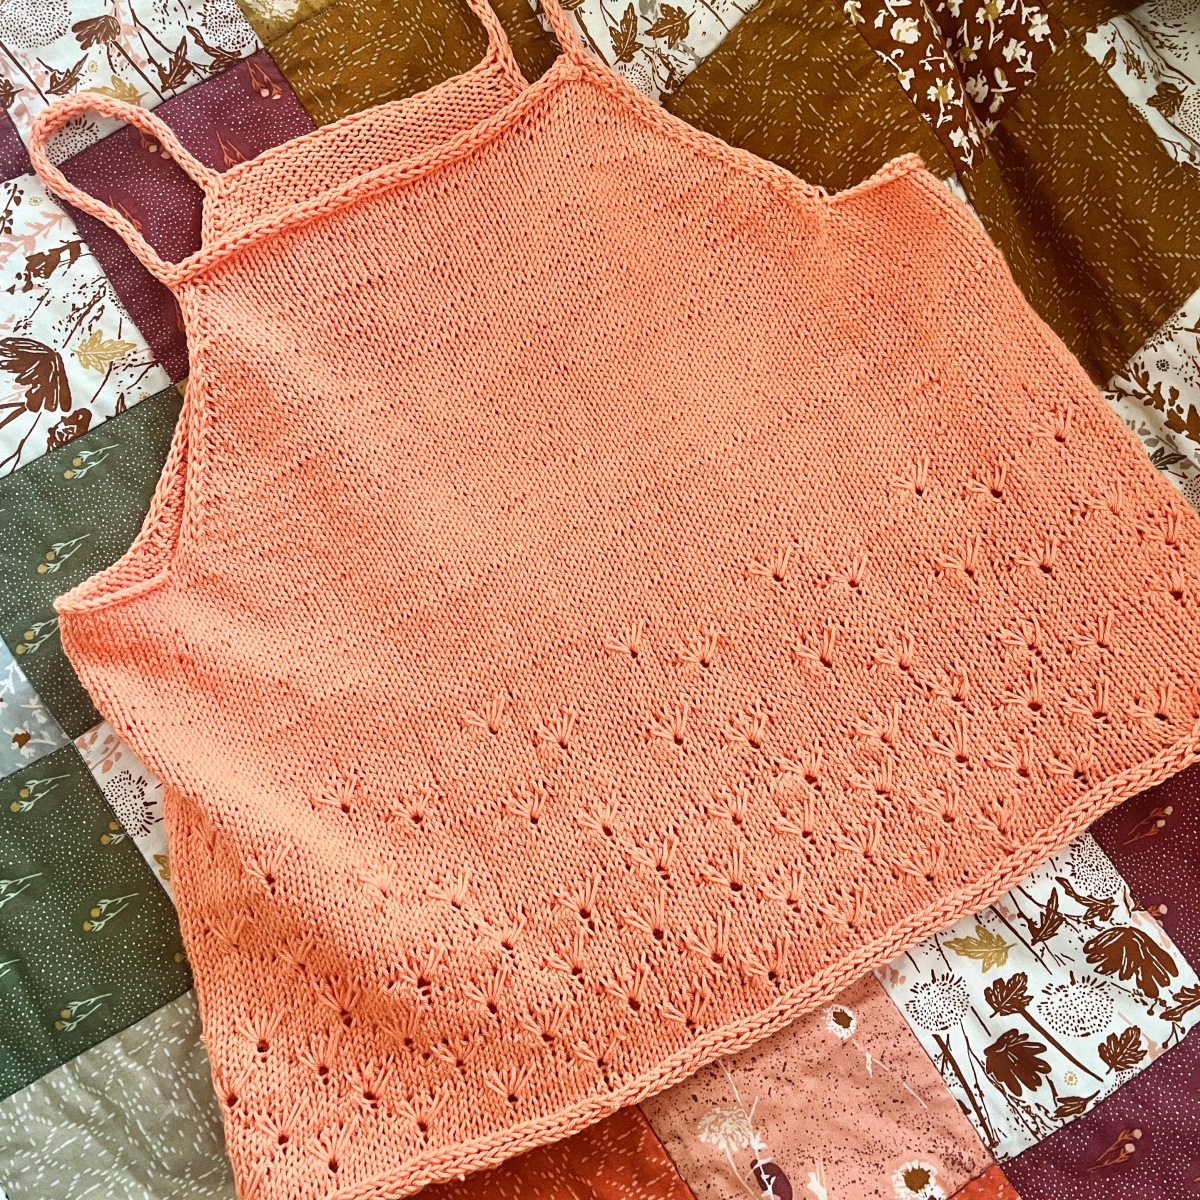 Dandelion Top – Knitting Pattern